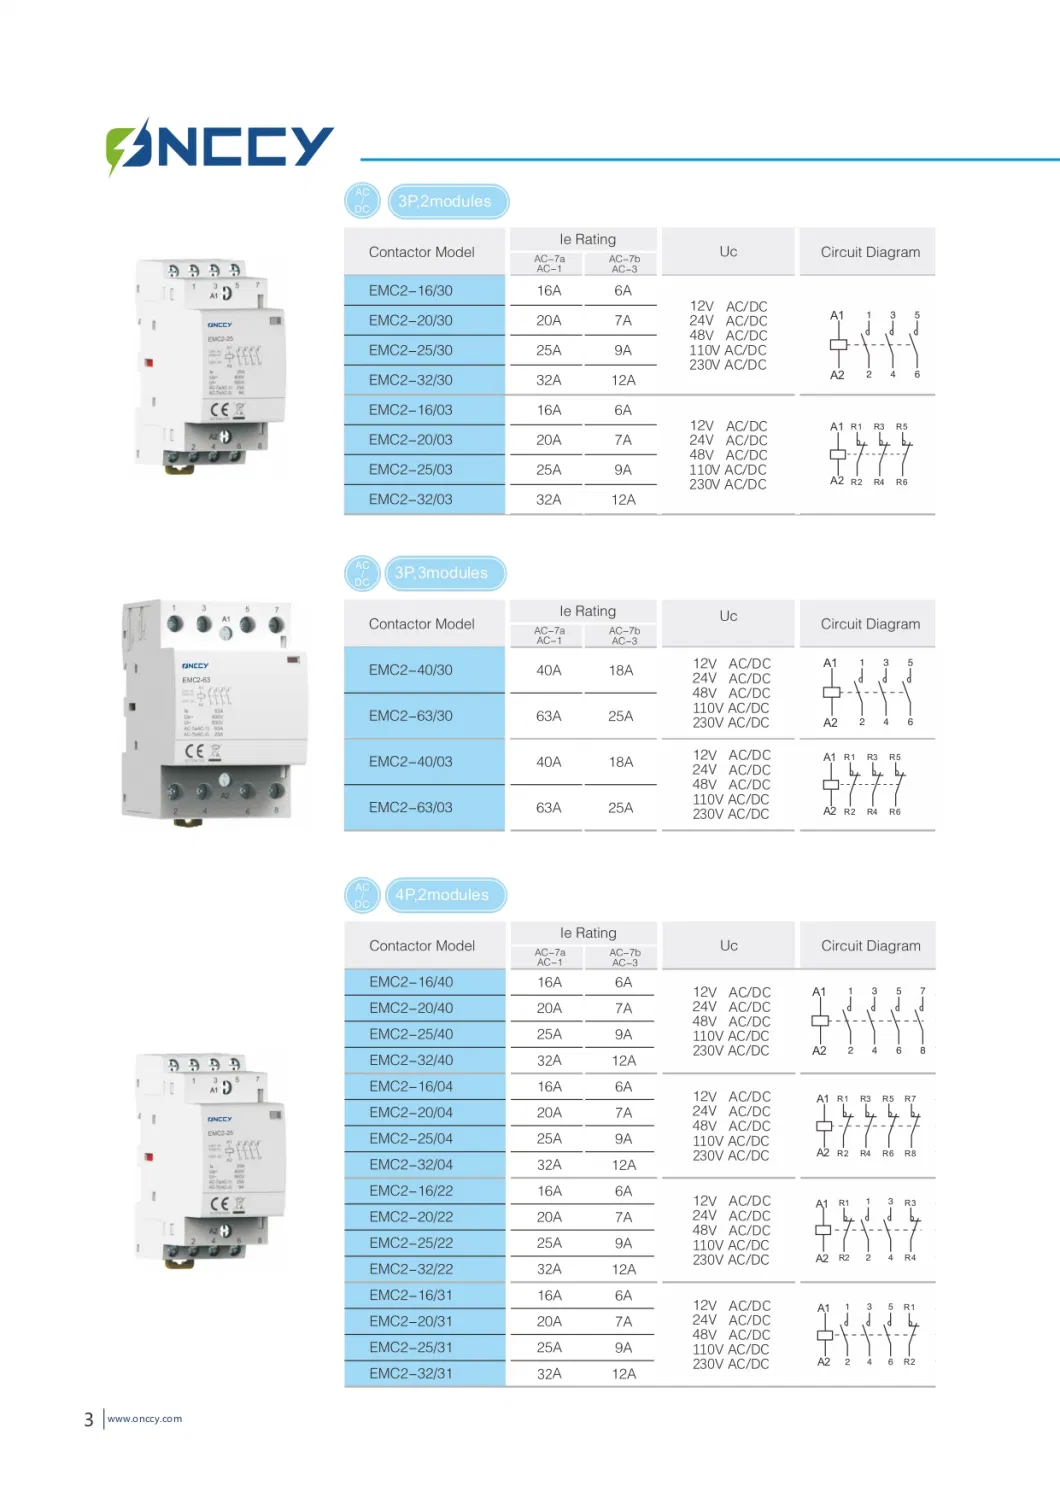 Onccy High Quality Solar PV, Battery Energy Storage EMC1 4pole 2, 3, 6modules16A-125A AC Modular Contactor